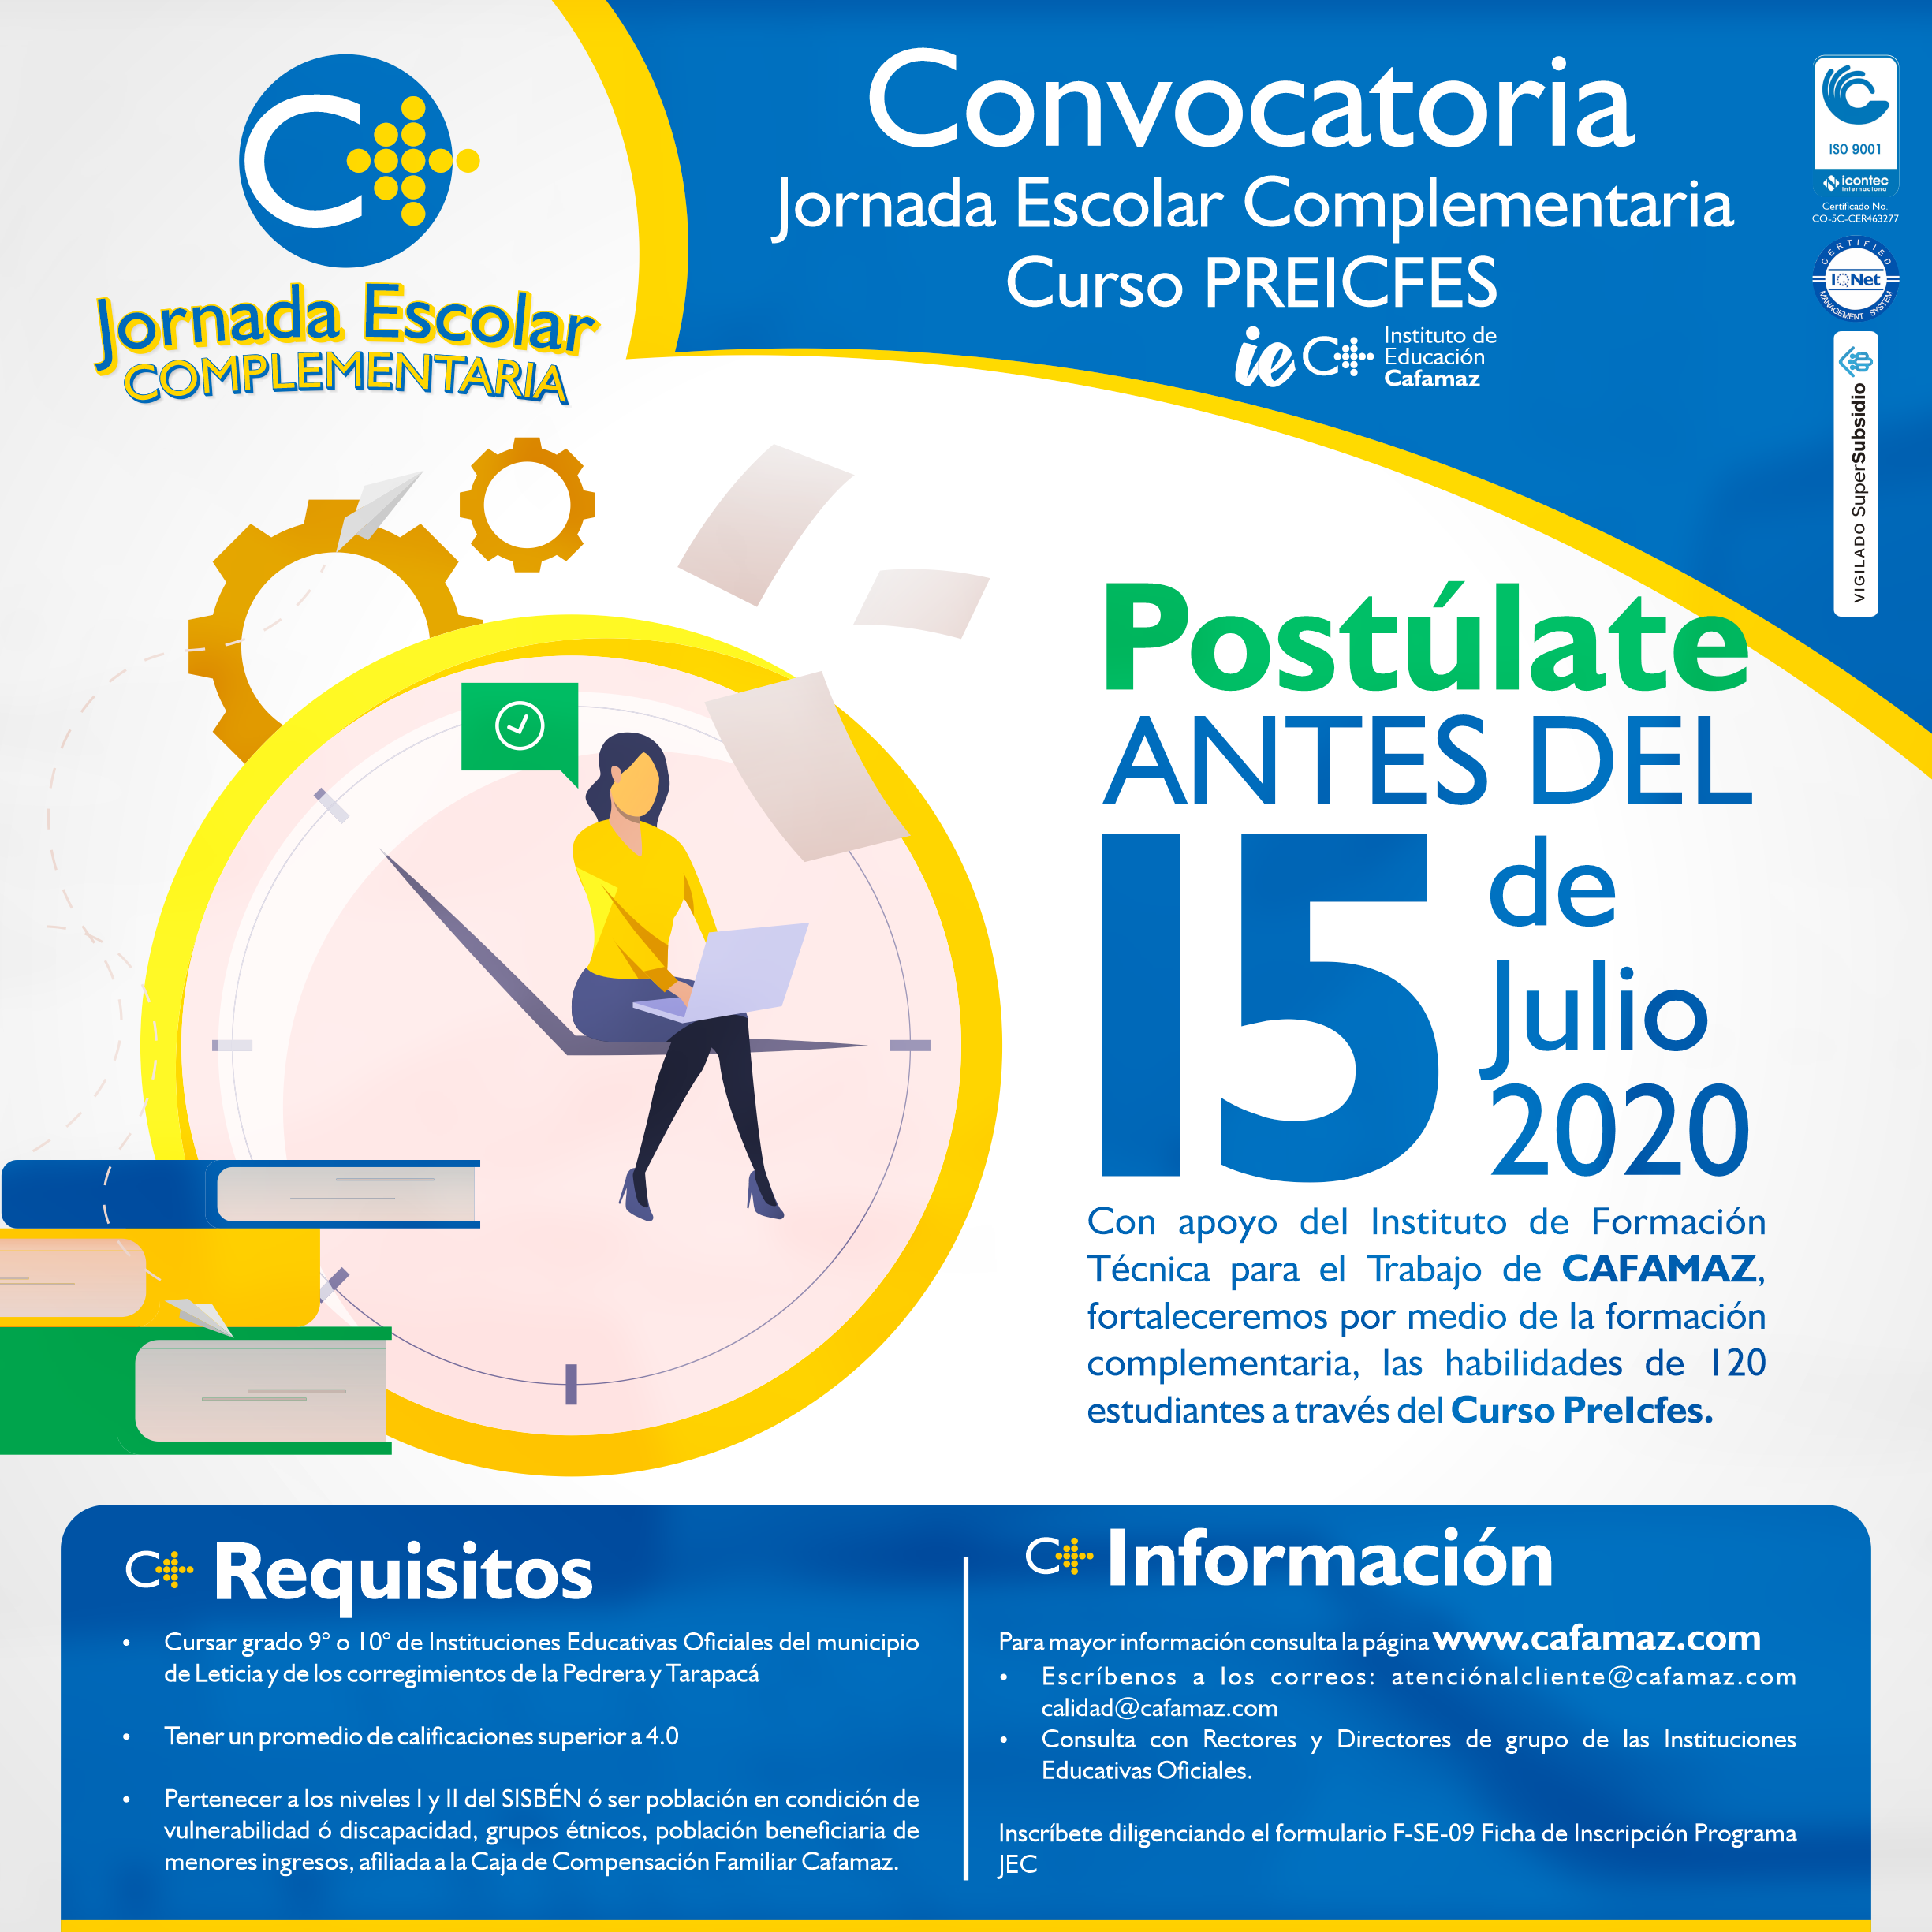 Convocatoria Jornada Escolar Complementaria – Curso PRE ICFES | Cafamaz, 2020